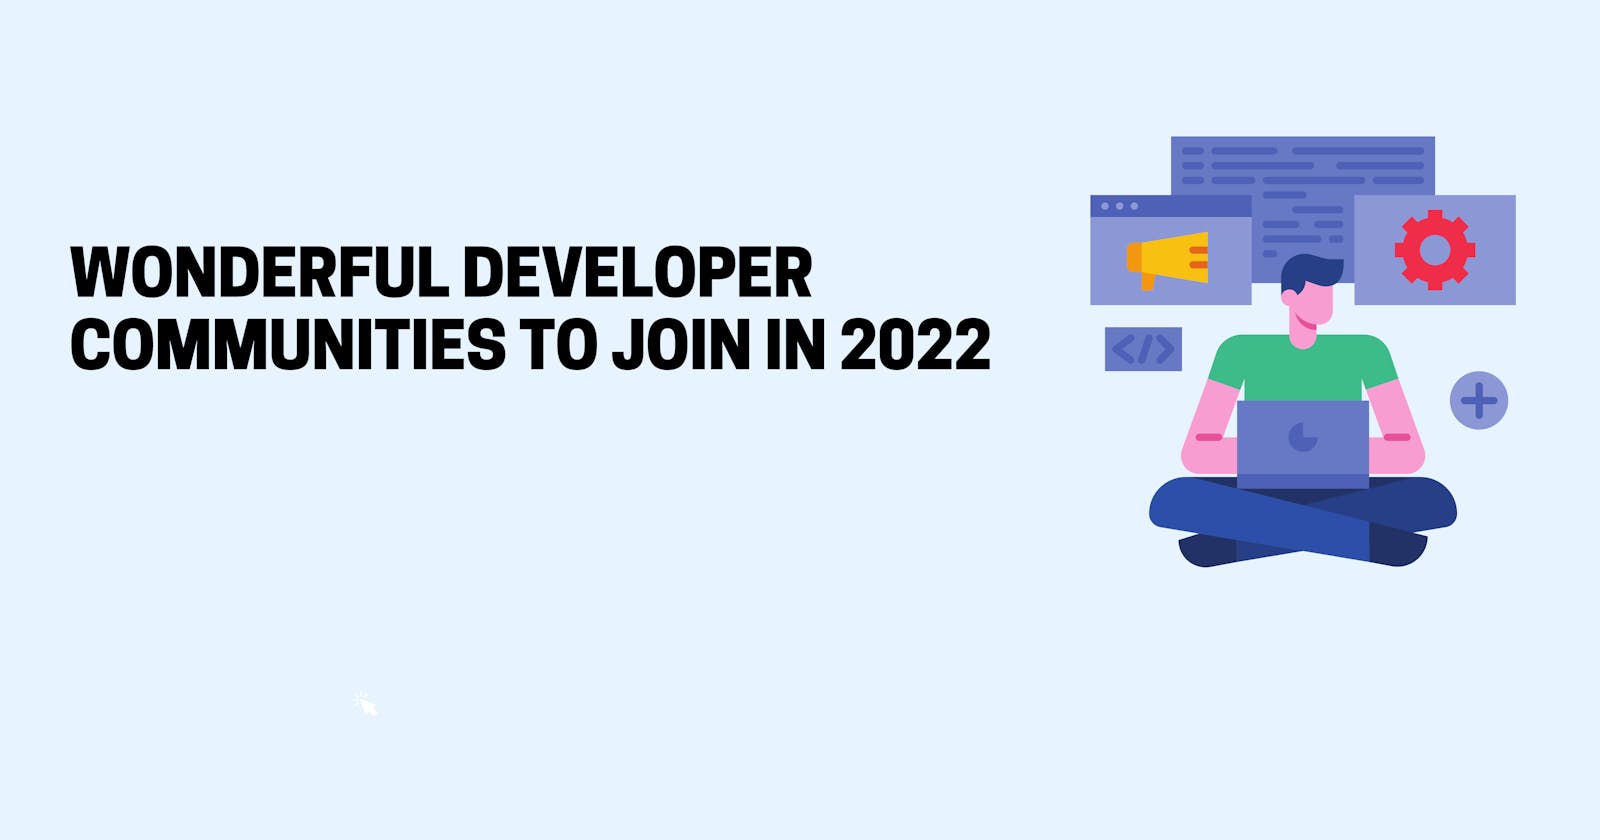 Wonderful developer communities to join in 2022